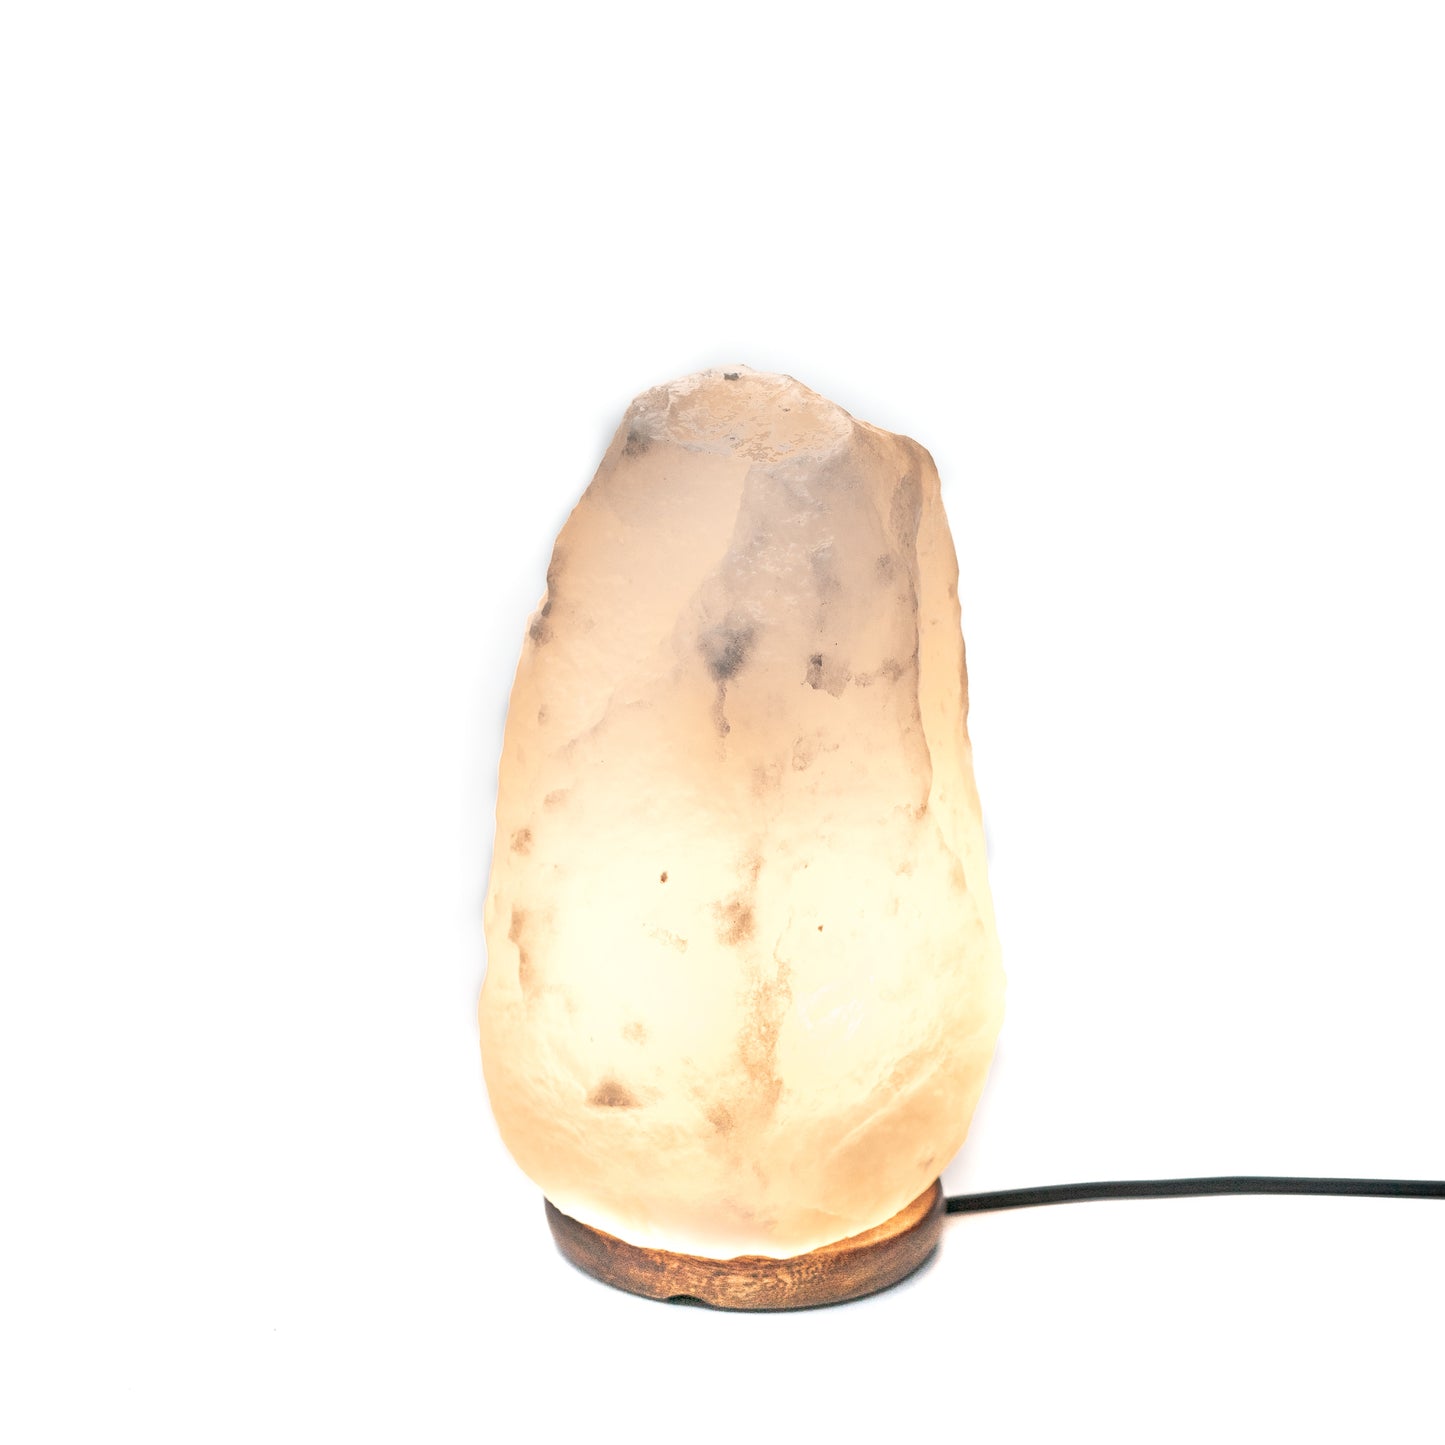 Natural salt lamp 5-7kg (white) - Case of 4